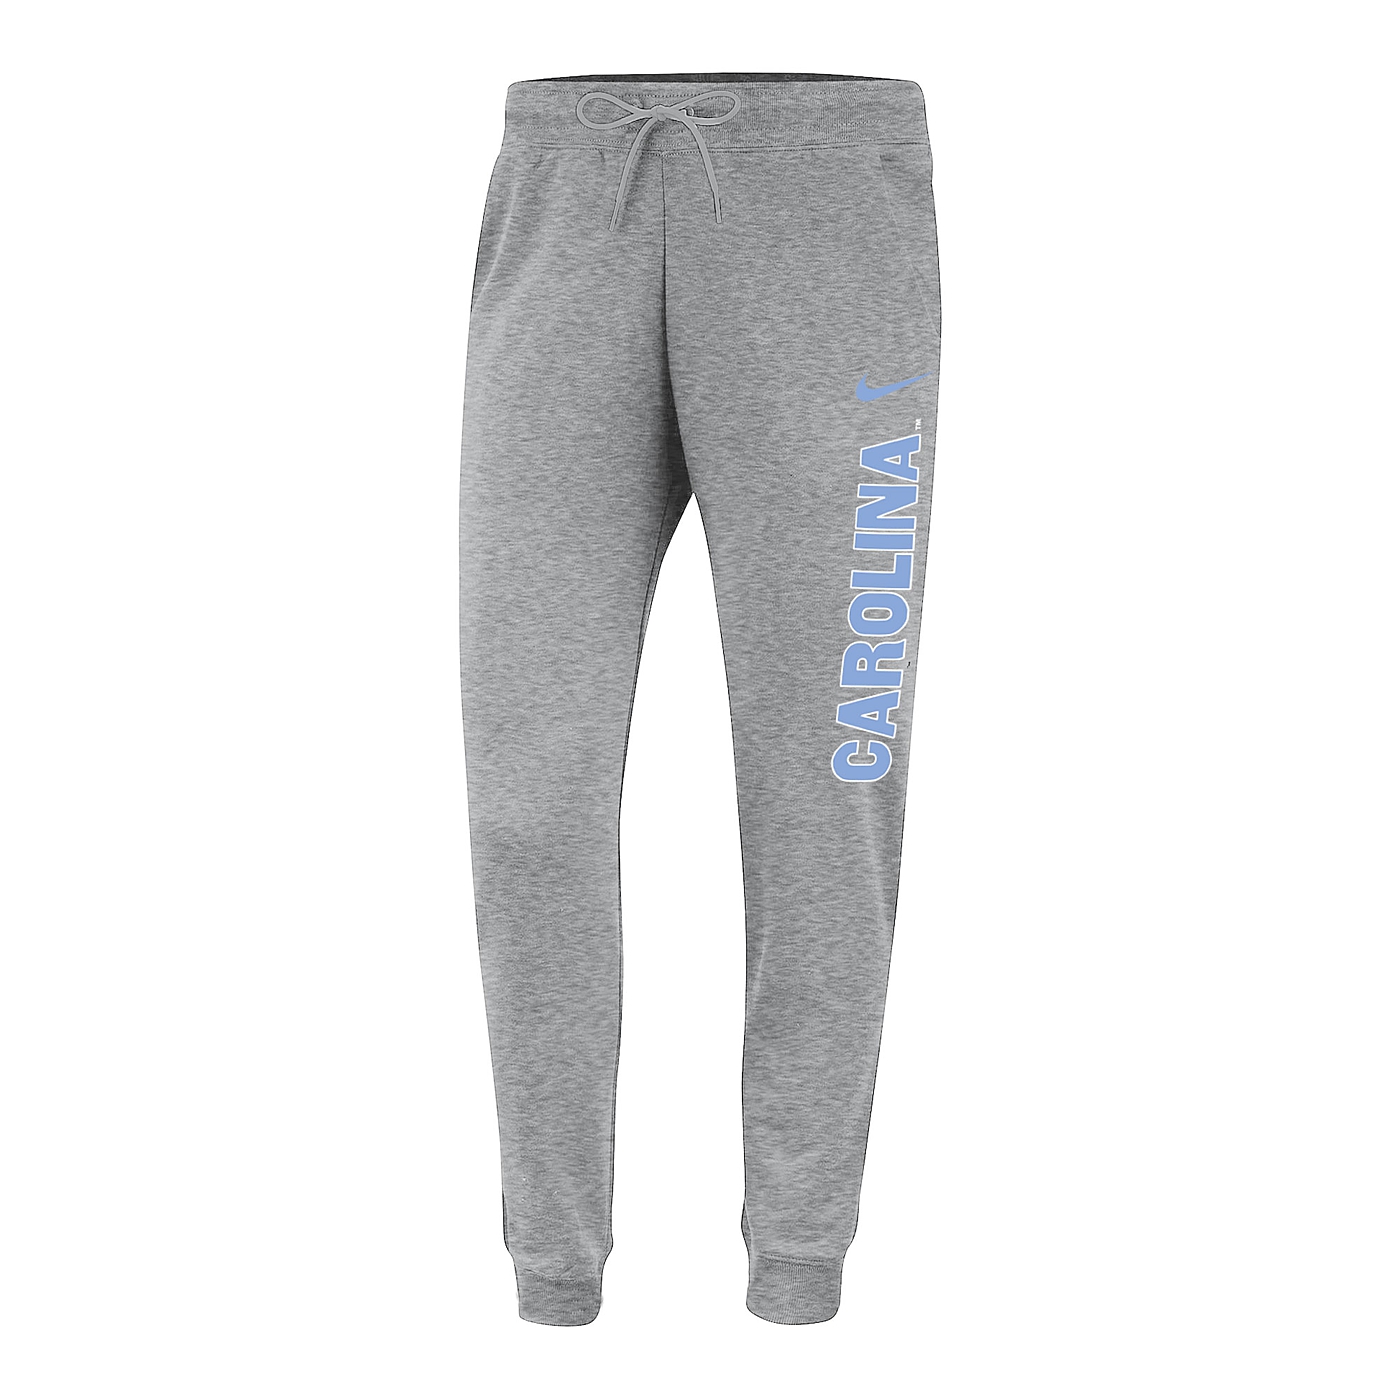 Johnny T-shirt - North Carolina Tar Heels - Nike Ladies' Varsity Jogger  Pants (Grey) by Nike